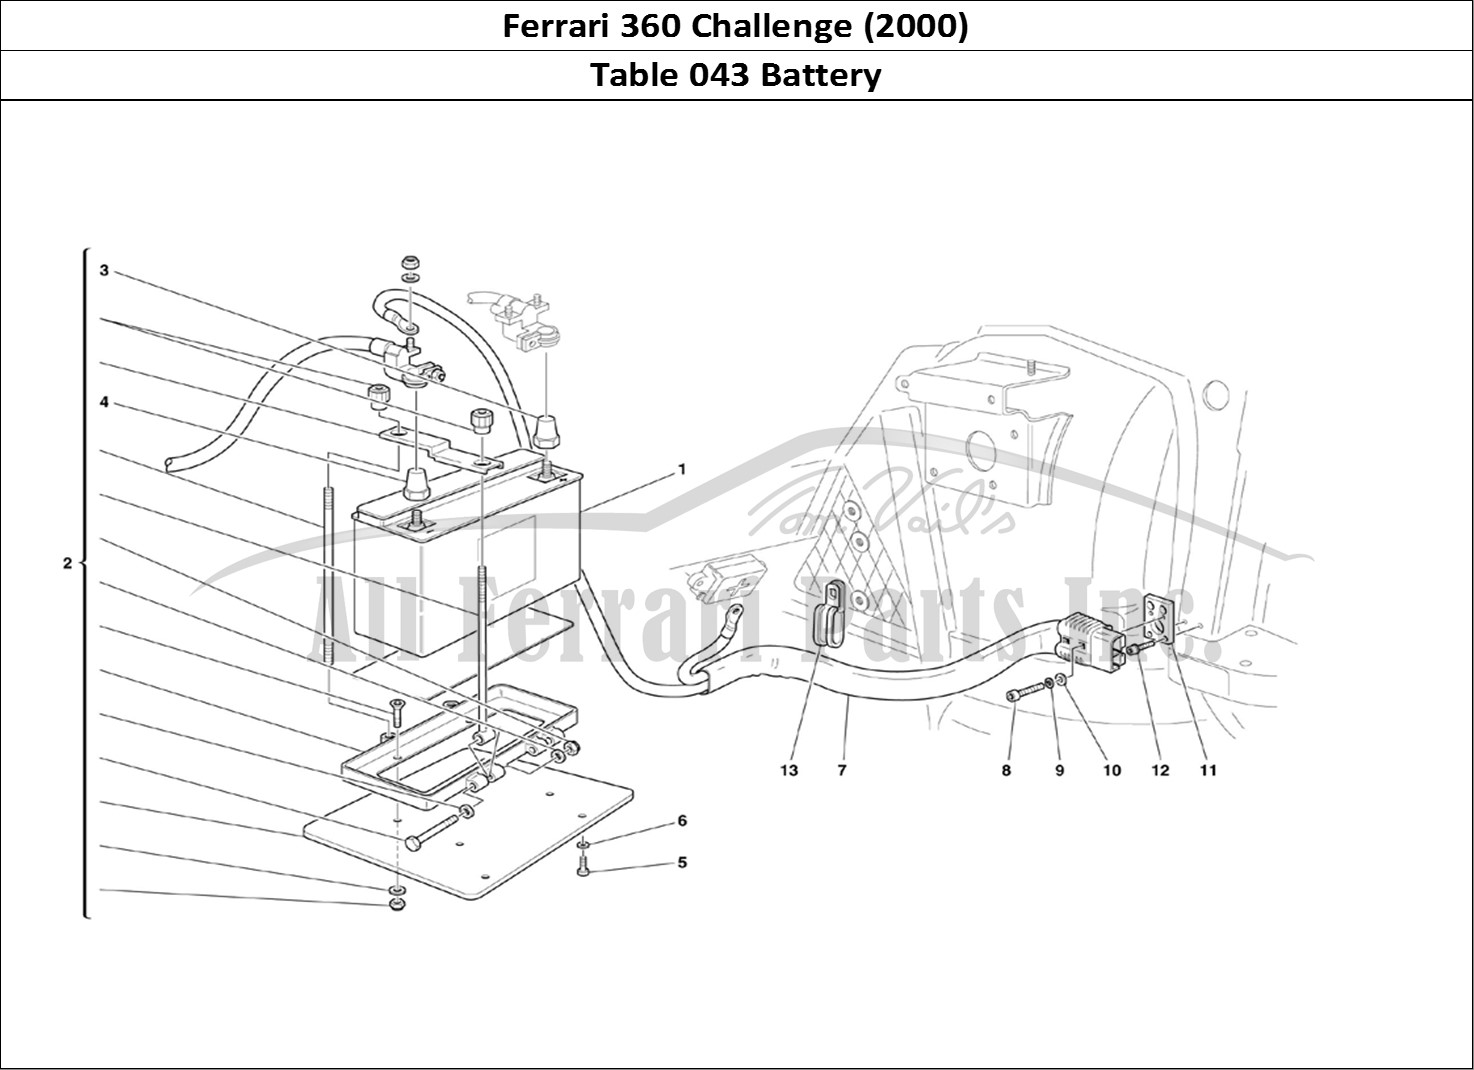 Ferrari Parts Ferrari 360 Challenge (2000) Page 043 Battery